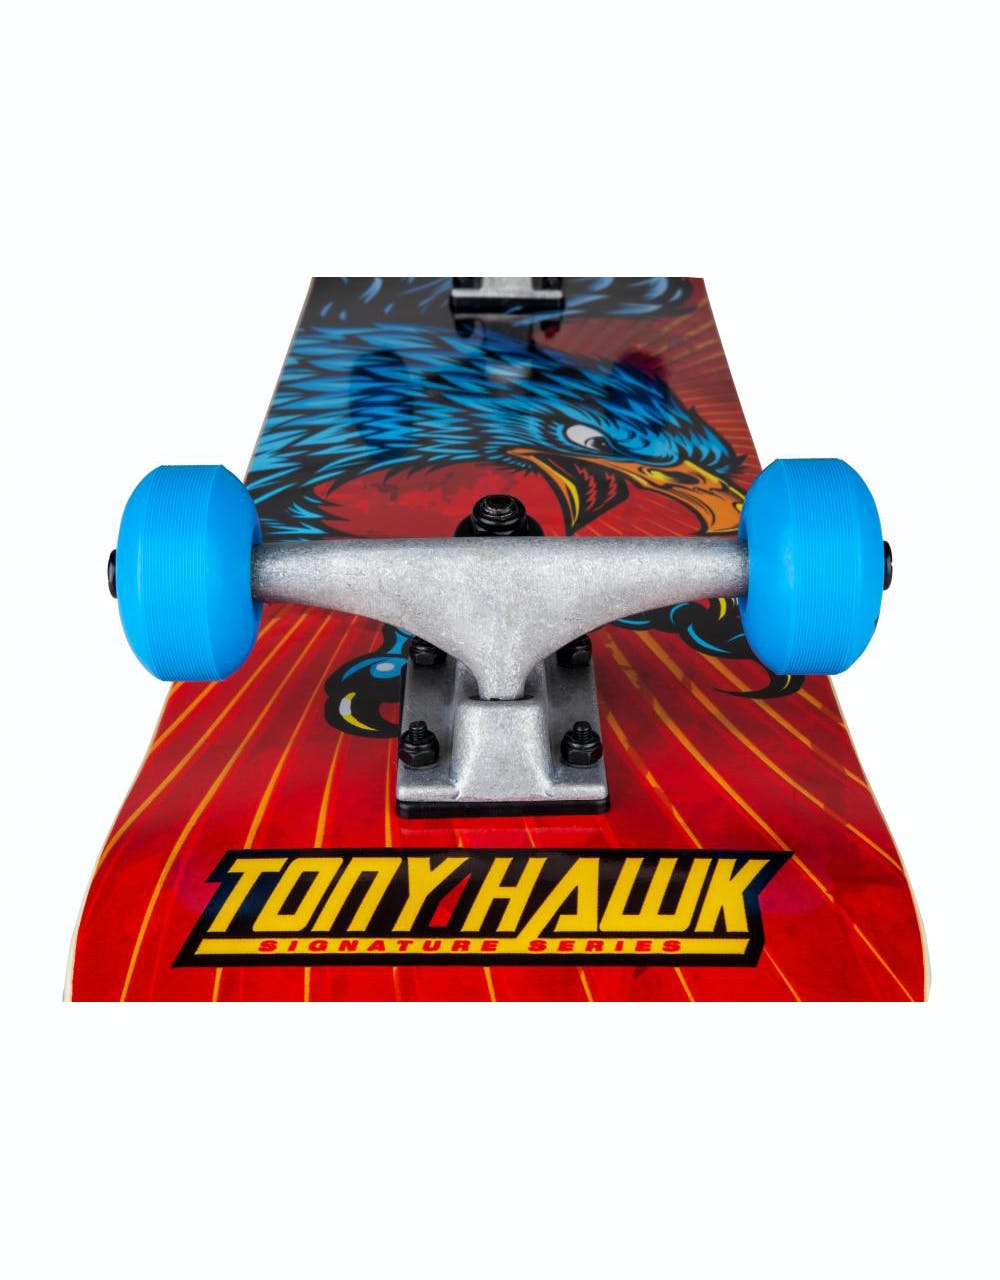 Tony Hawk 180 Diving Hawk Complete Skateboard - 7.75"